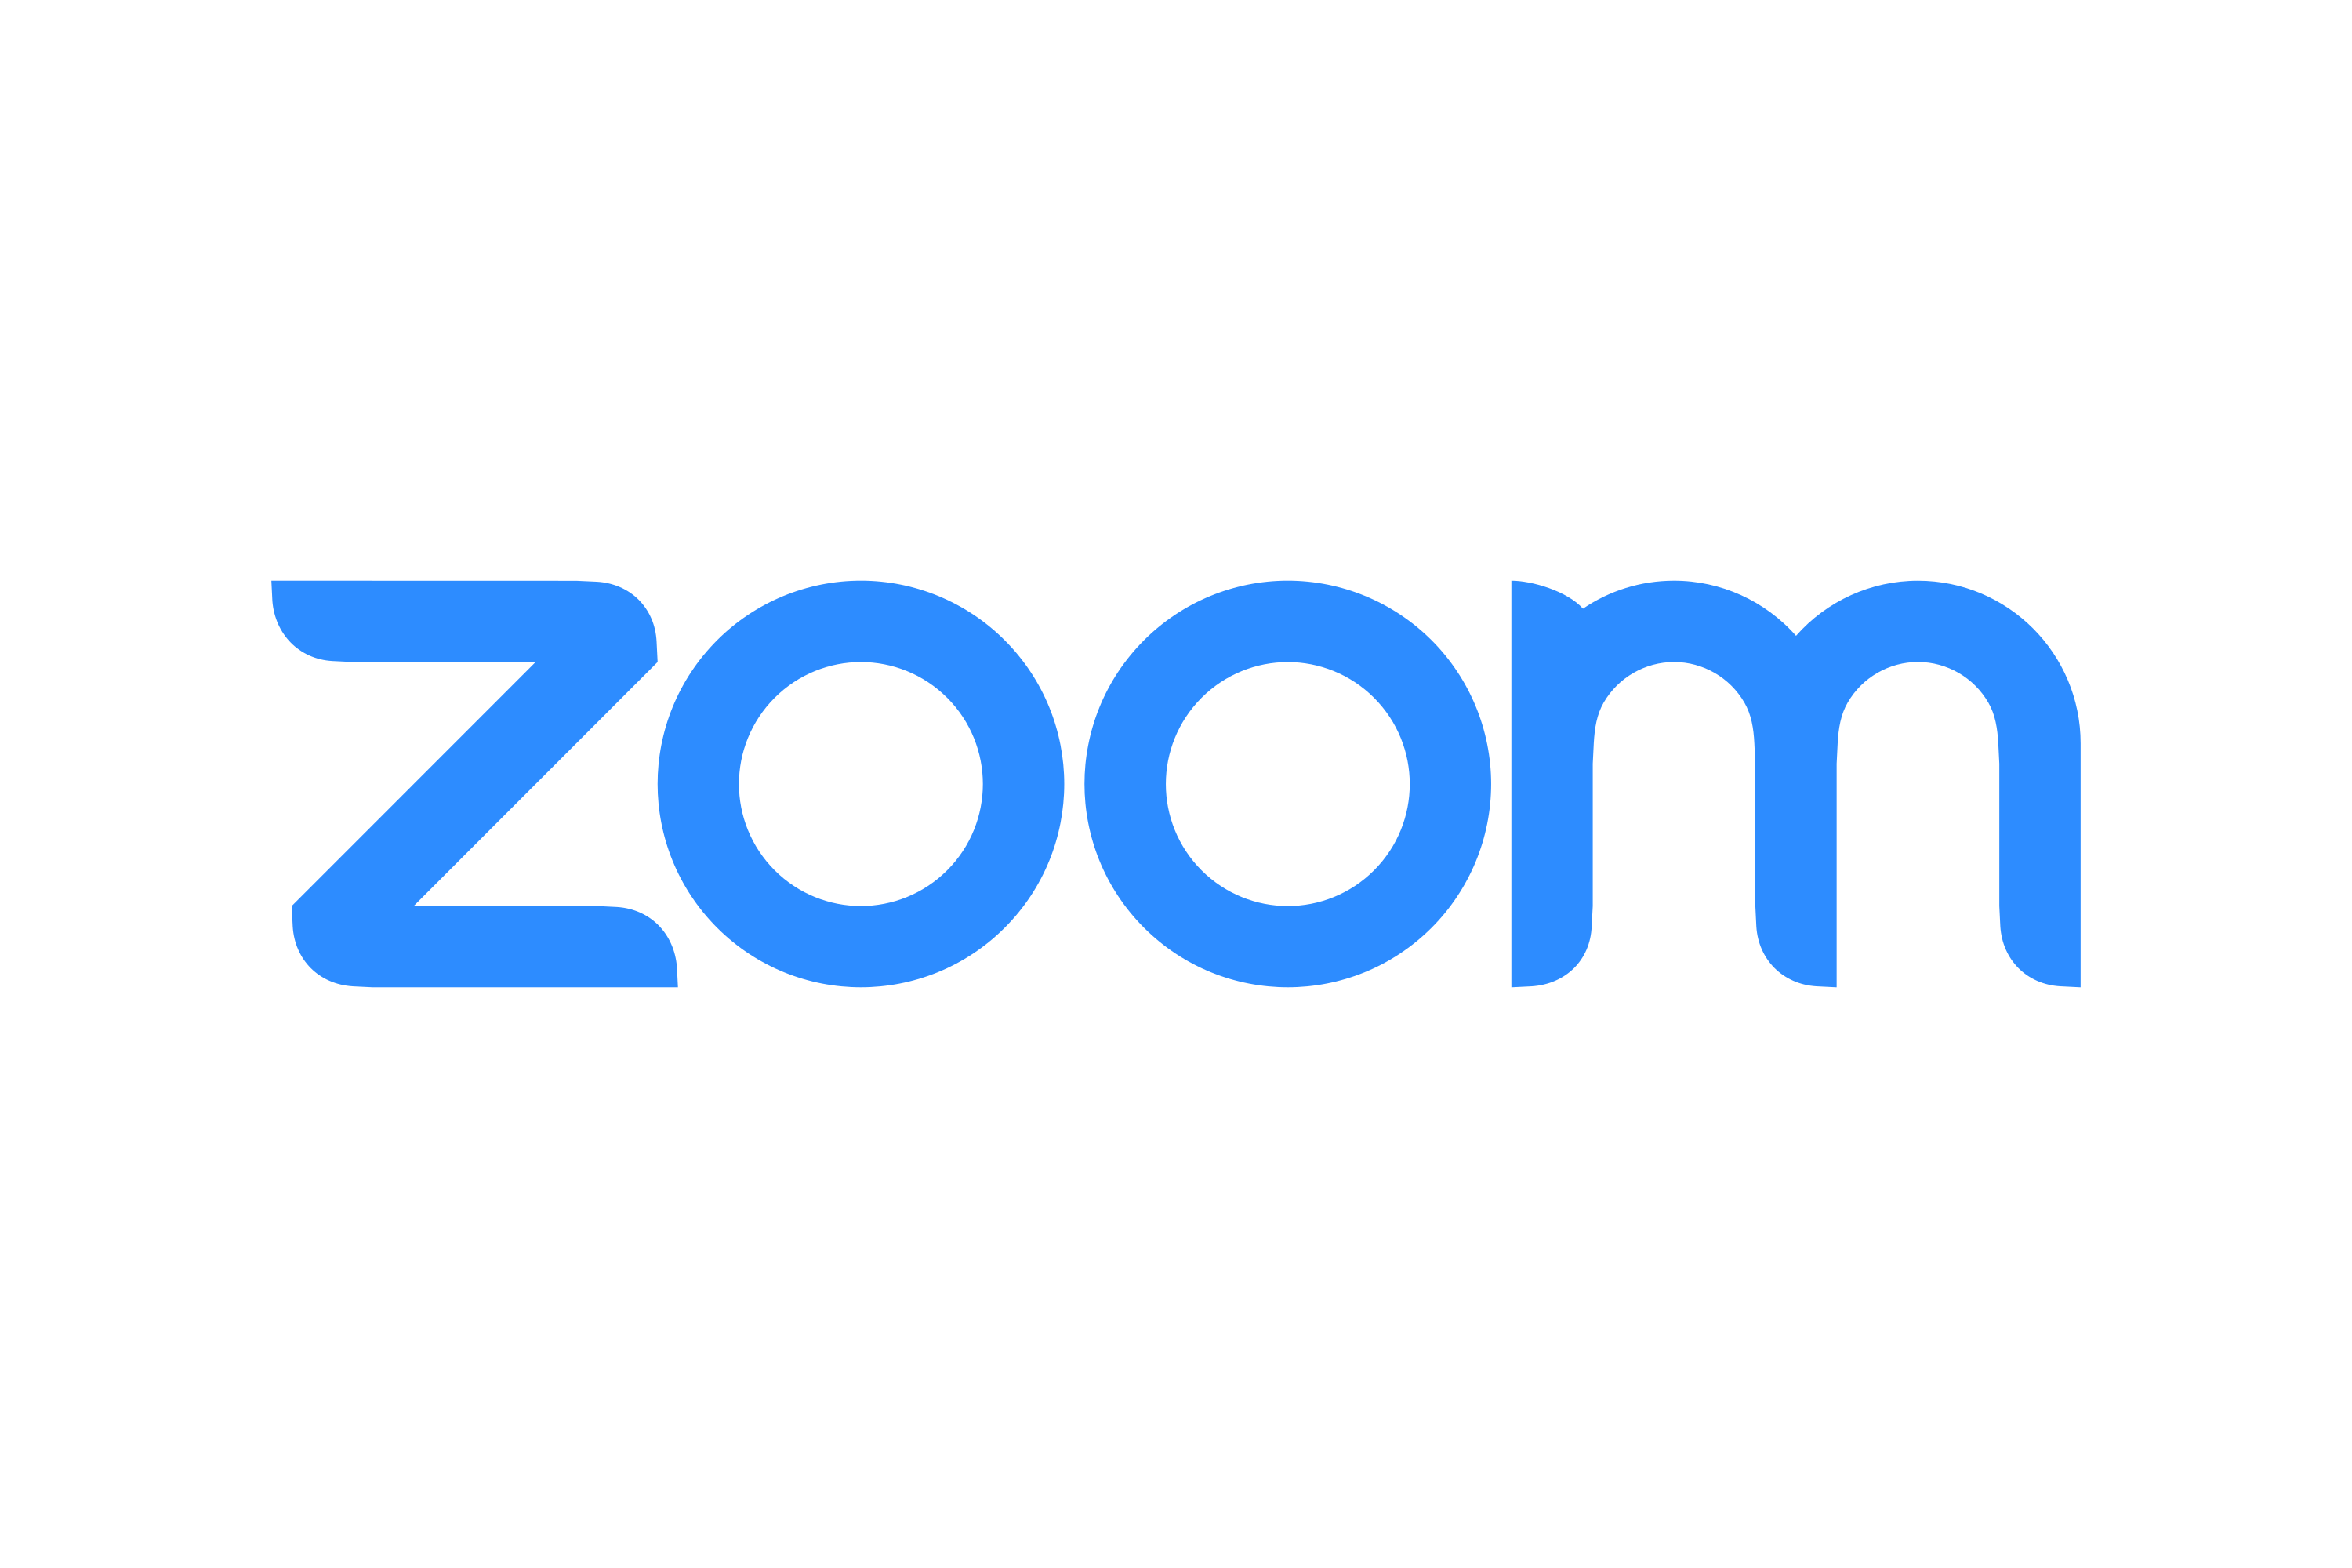 zoom video communications logo